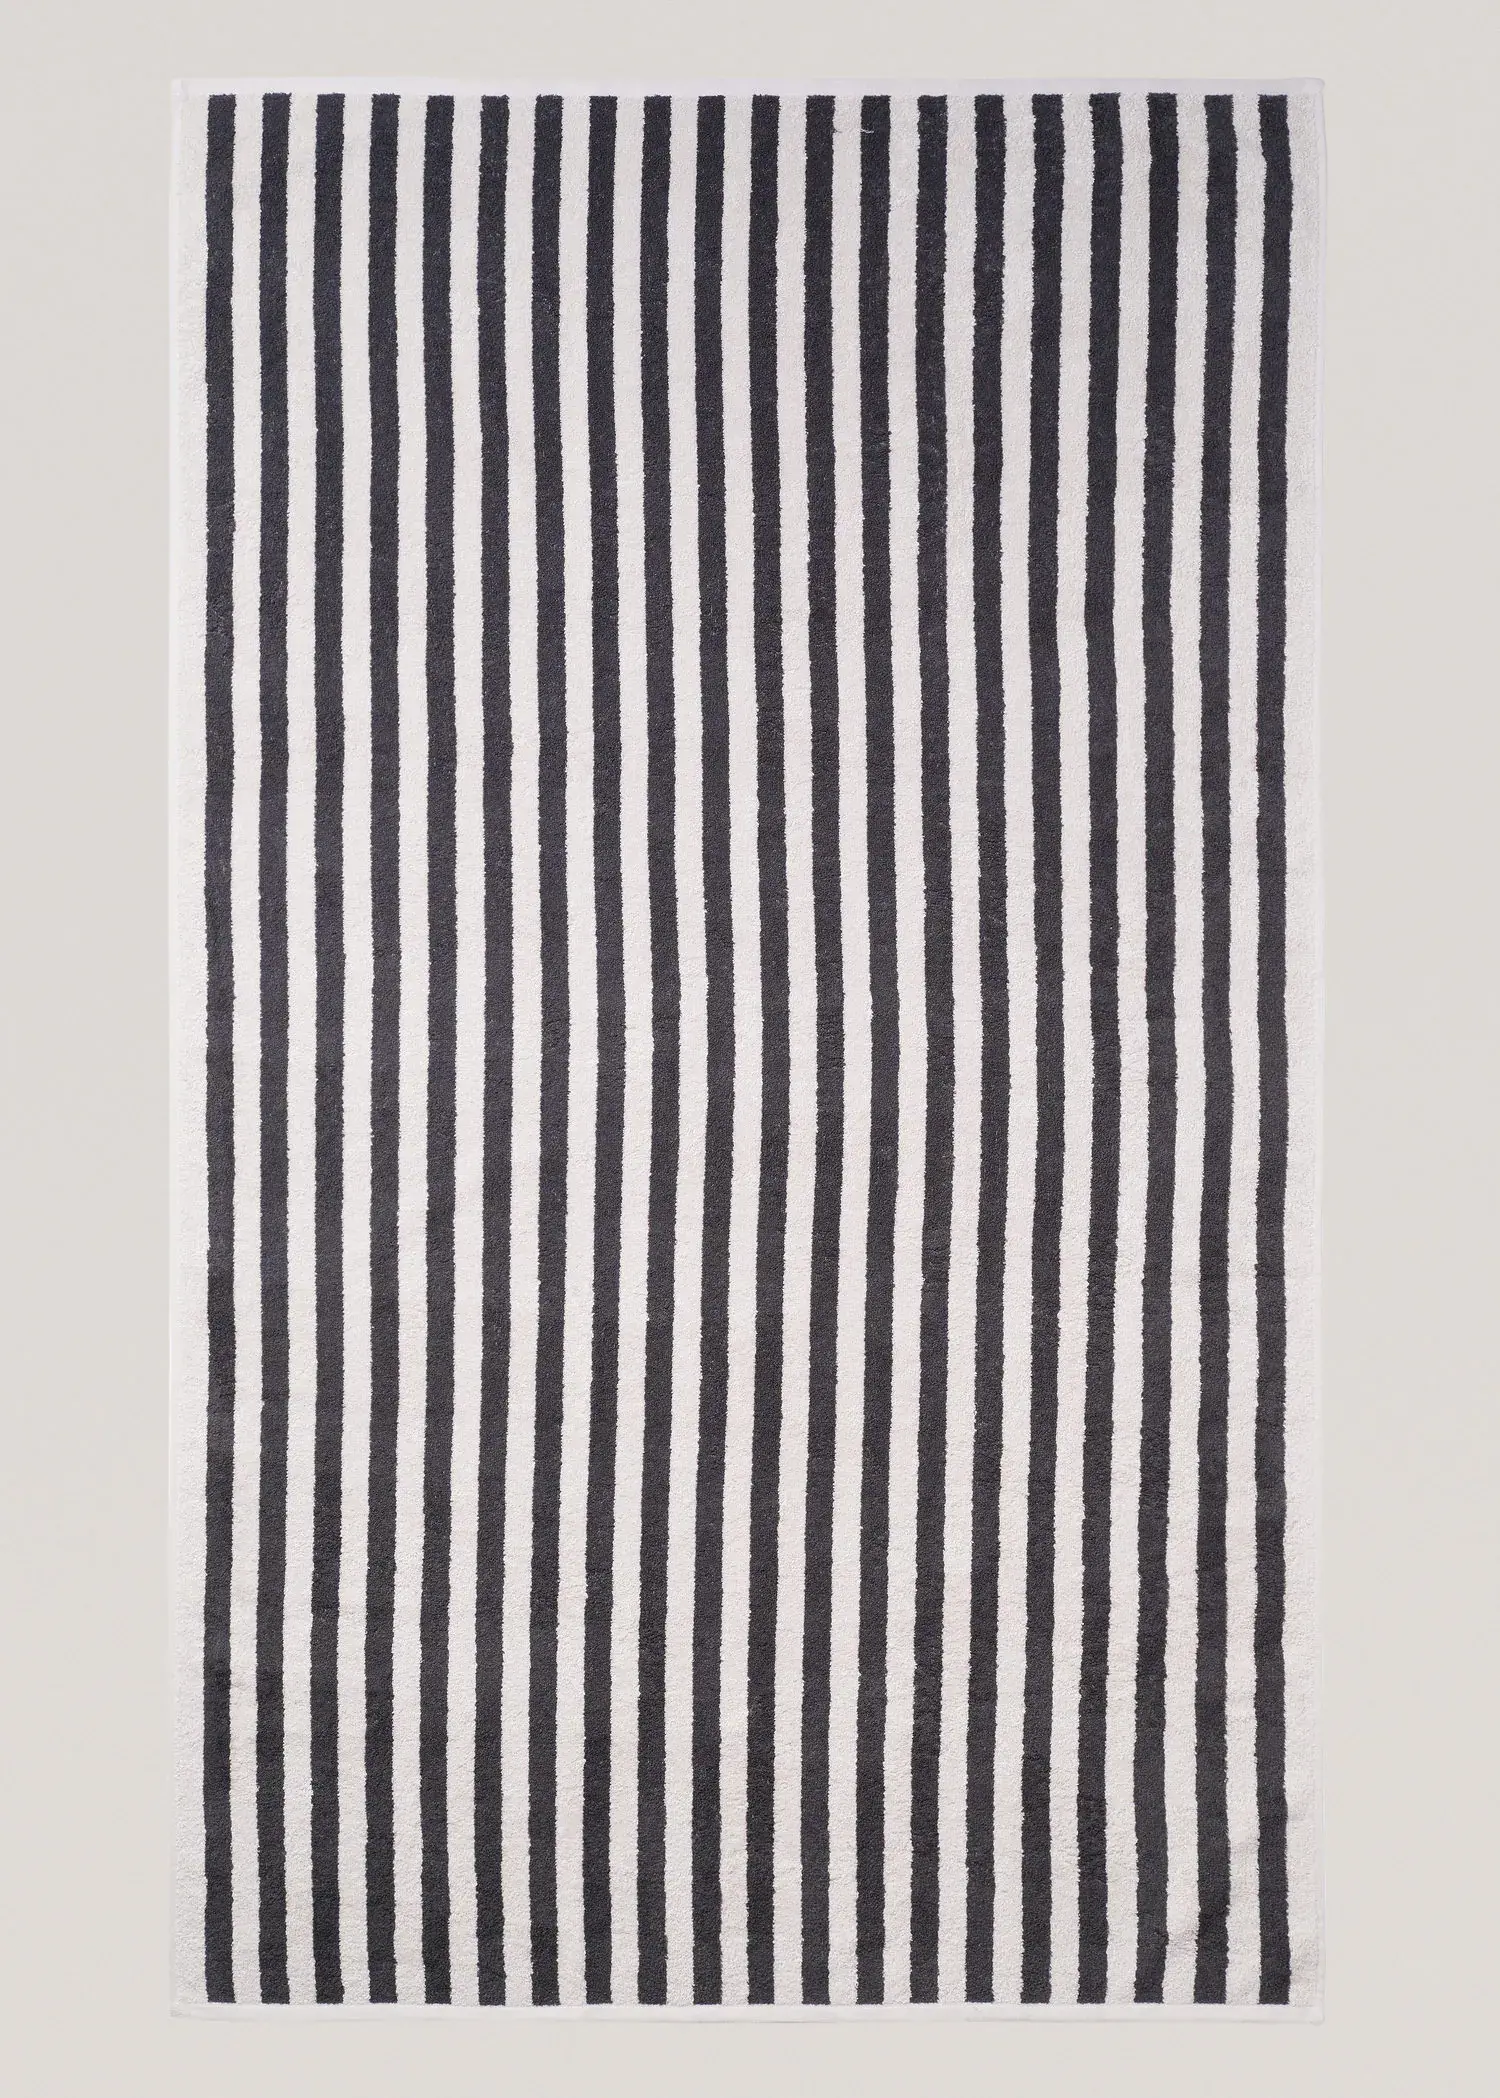 Mango 100% cotton striped beach towel 100x180cm. 3